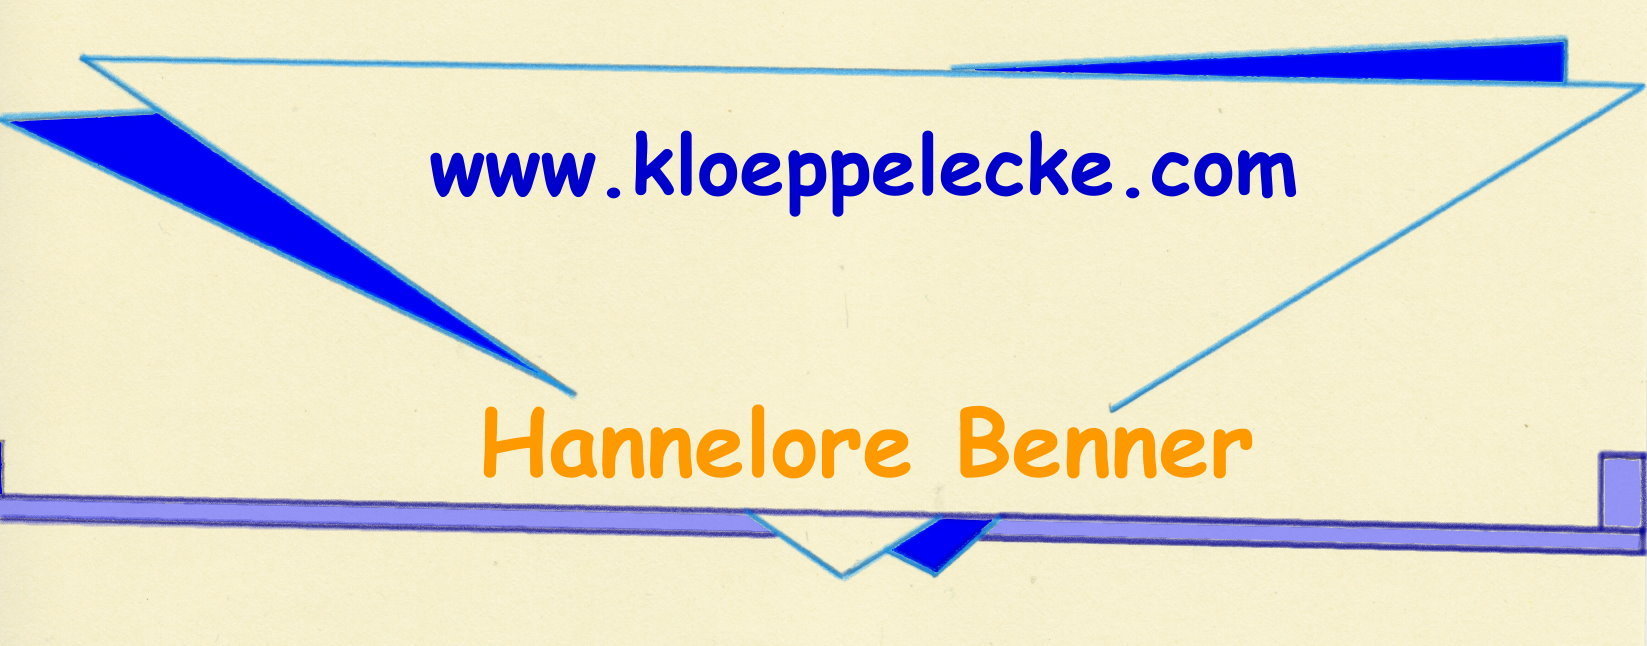 Klöppelecke.com